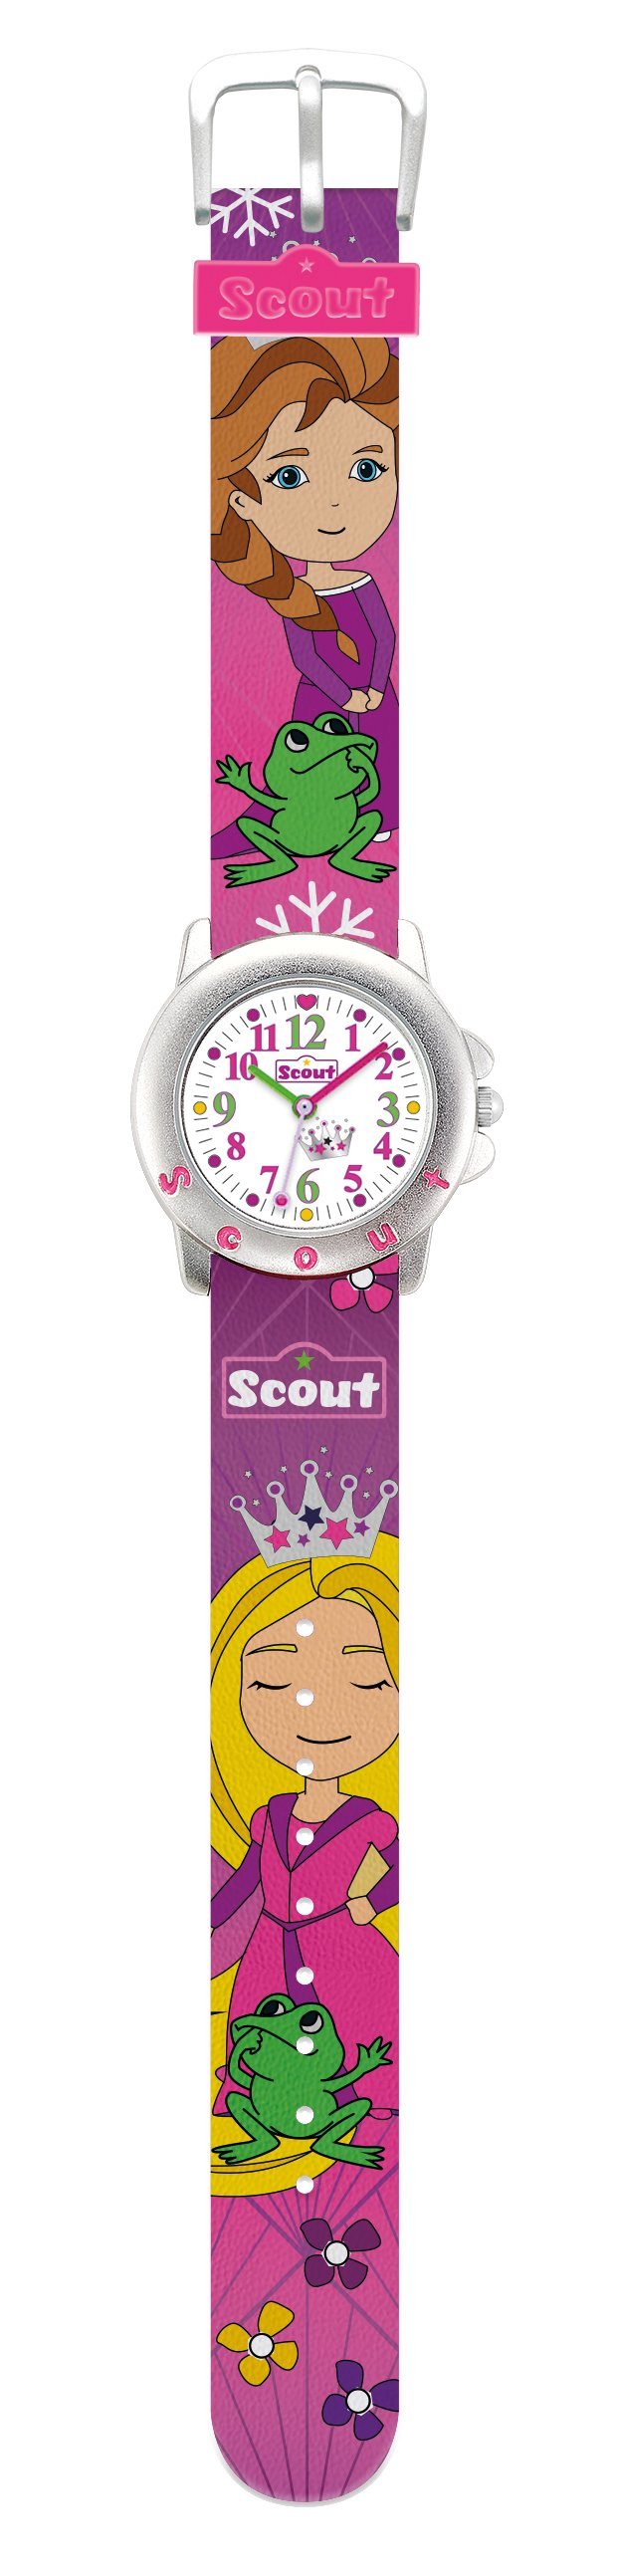 Star Kinder Prinzessinen Scout Kids 280393037 Armbanduhr Quarzuhr